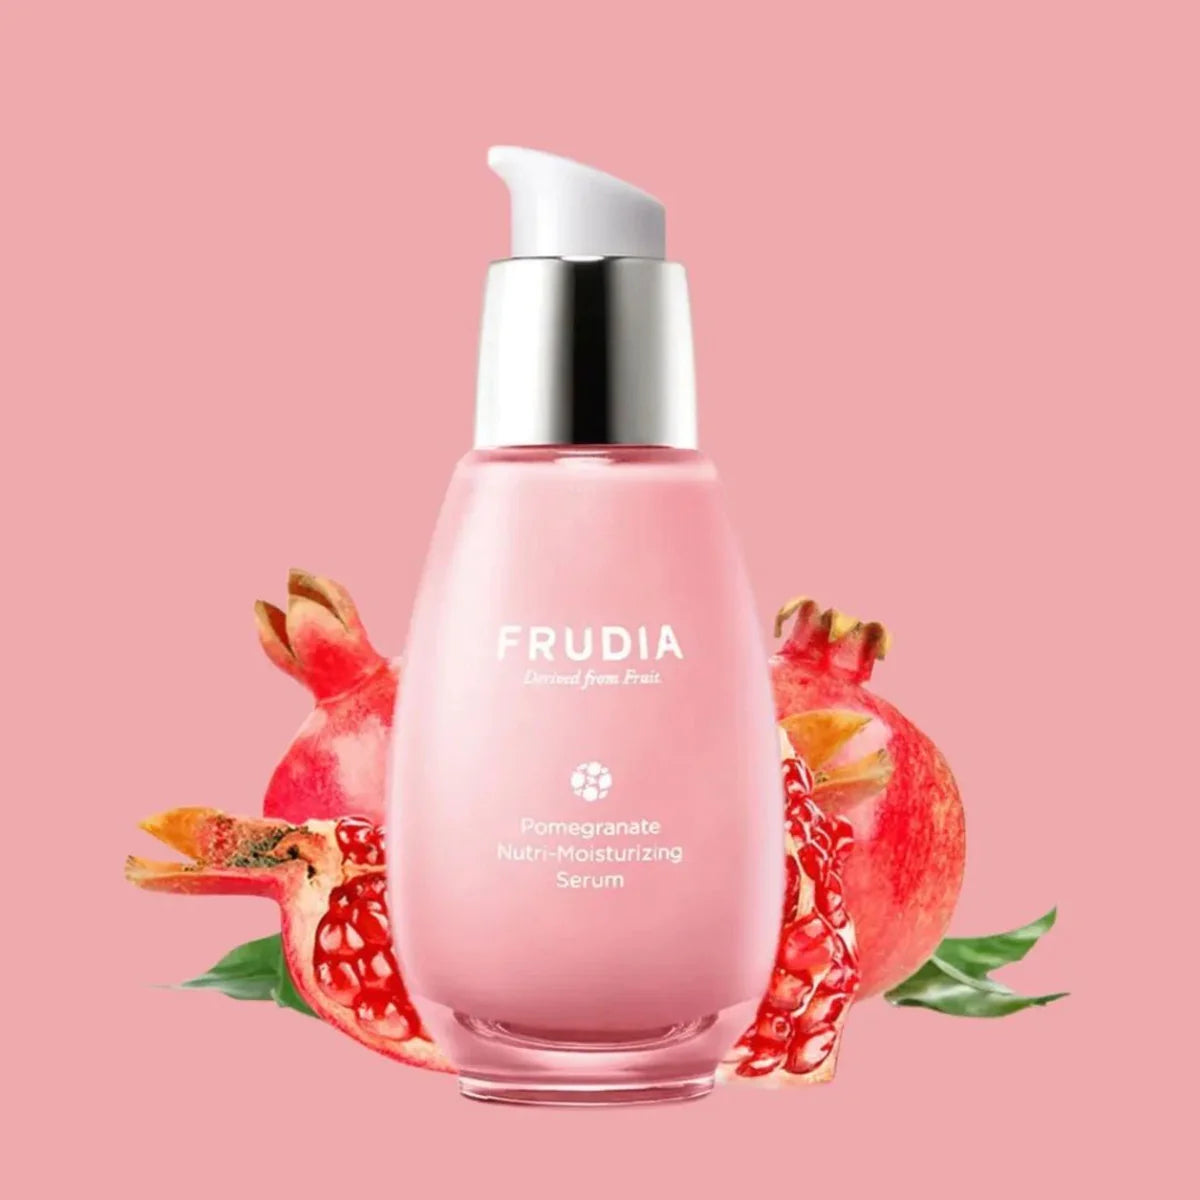 FRUDIA - Pomegranate Nutri-Moisturizing Serum